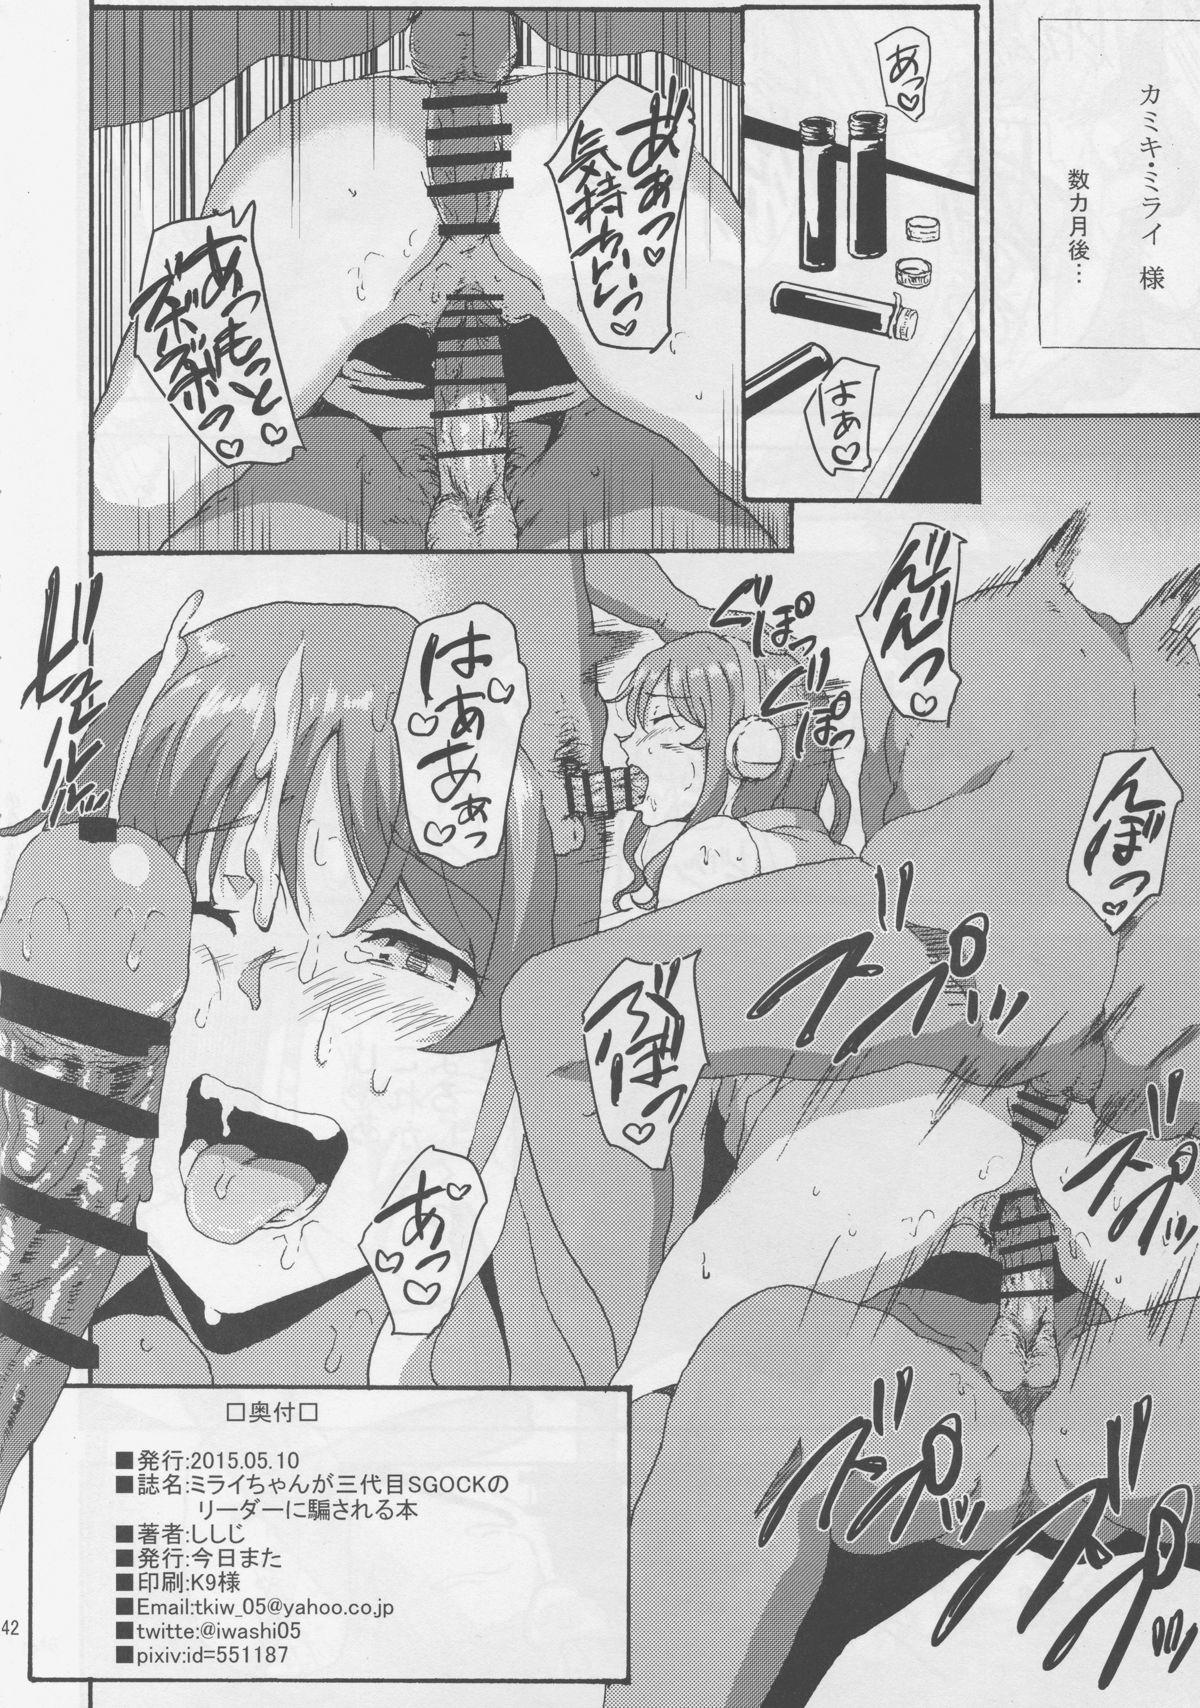 Small Mirai-chan ga Sandaime SGOCK no Leader ni Damasare Yarechau Hon - Gundam build fighters try Pegging - Page 42